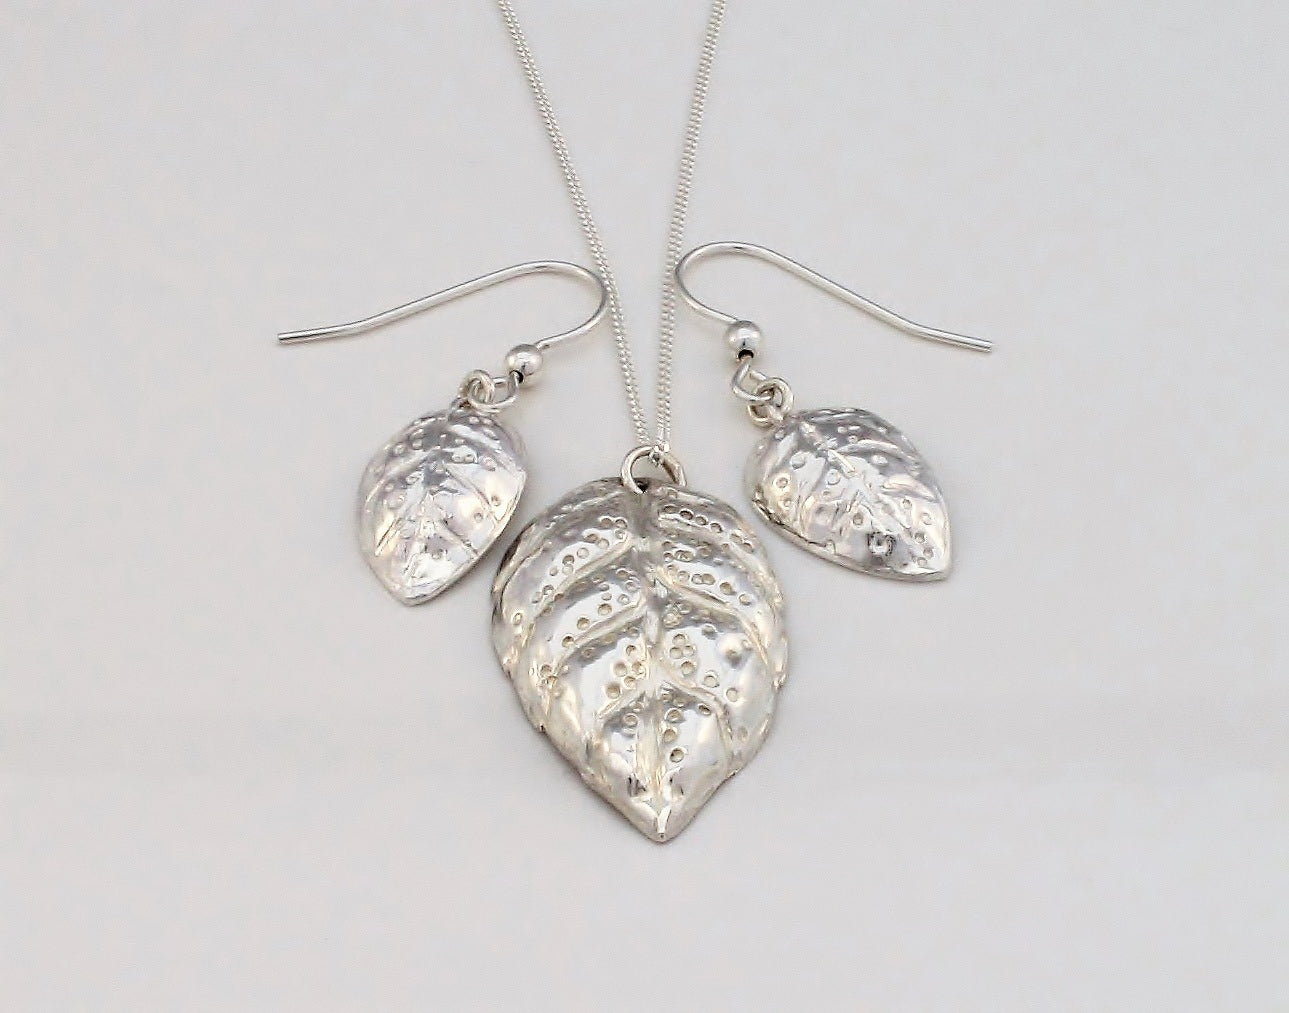 Karen J Ward - Leaf pendant and drop earrings